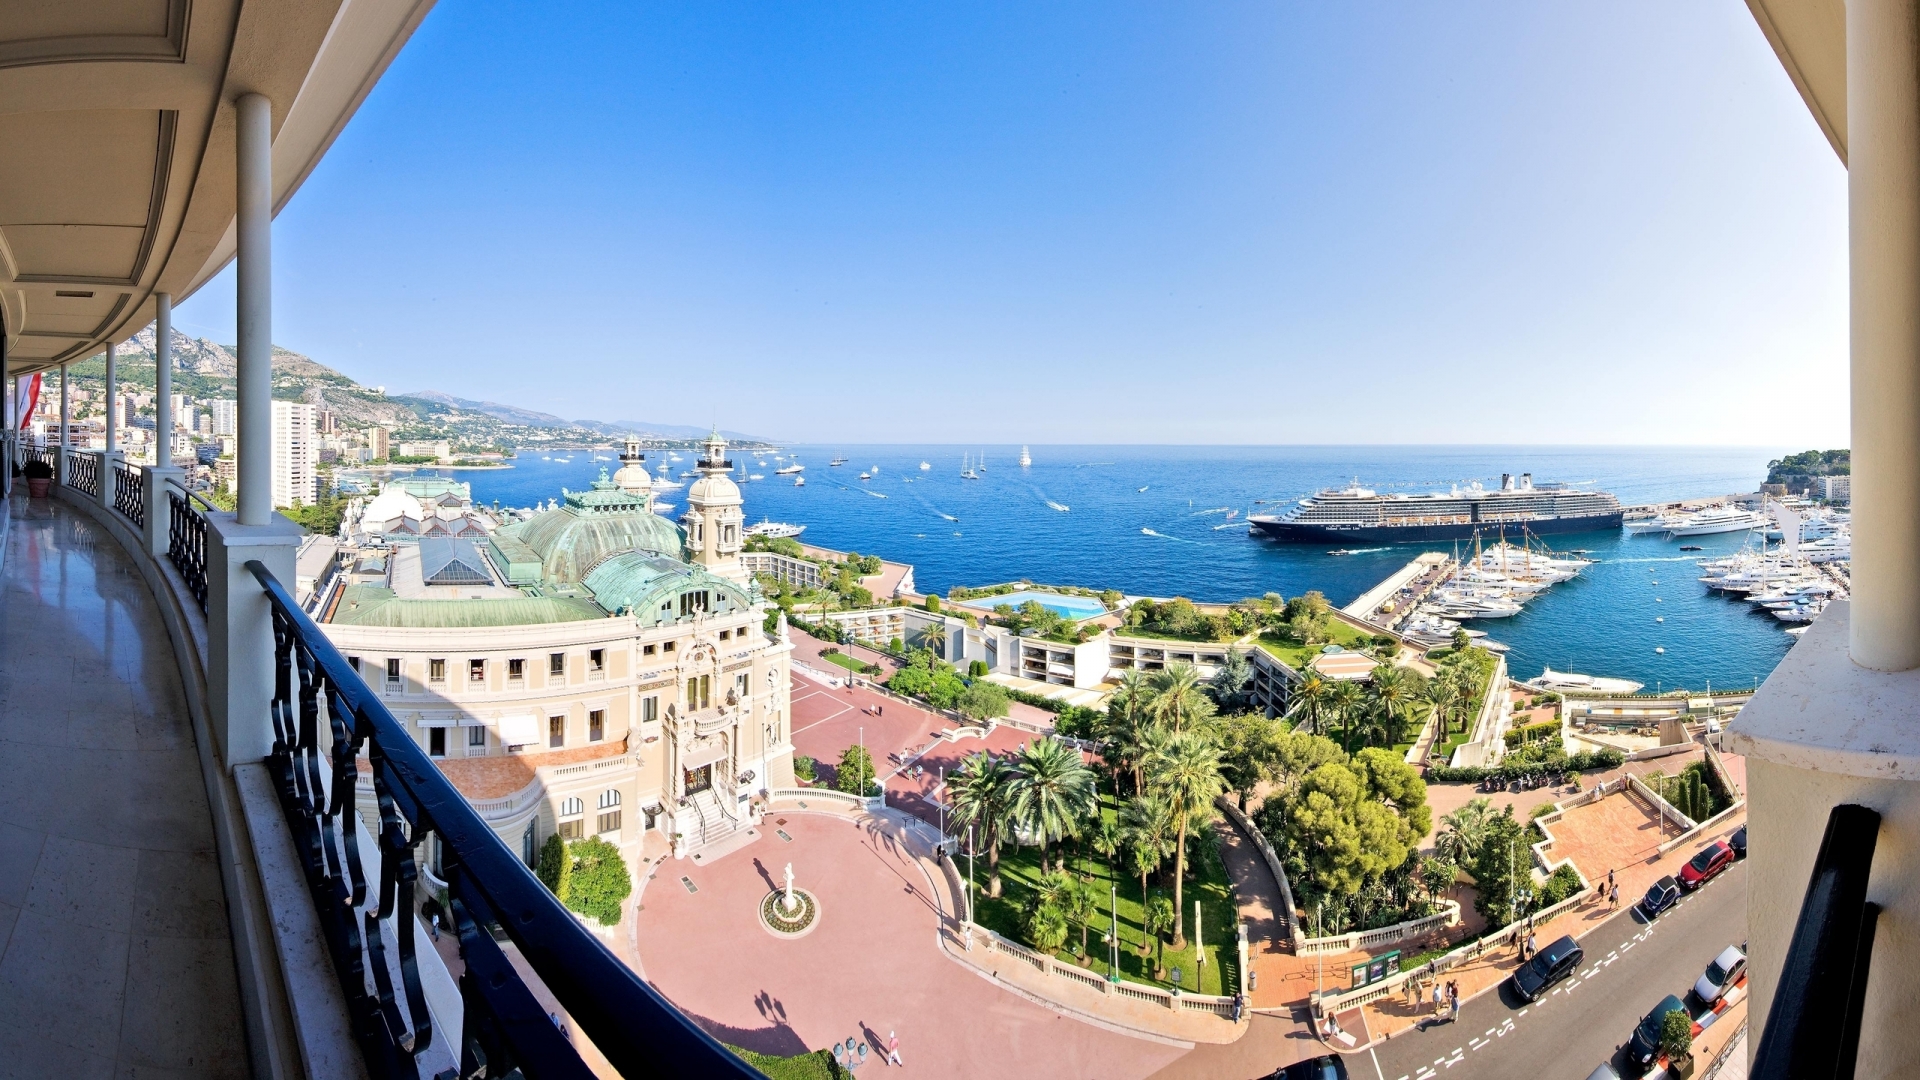 Monaco View for 1920 x 1080 HDTV 1080p resolution